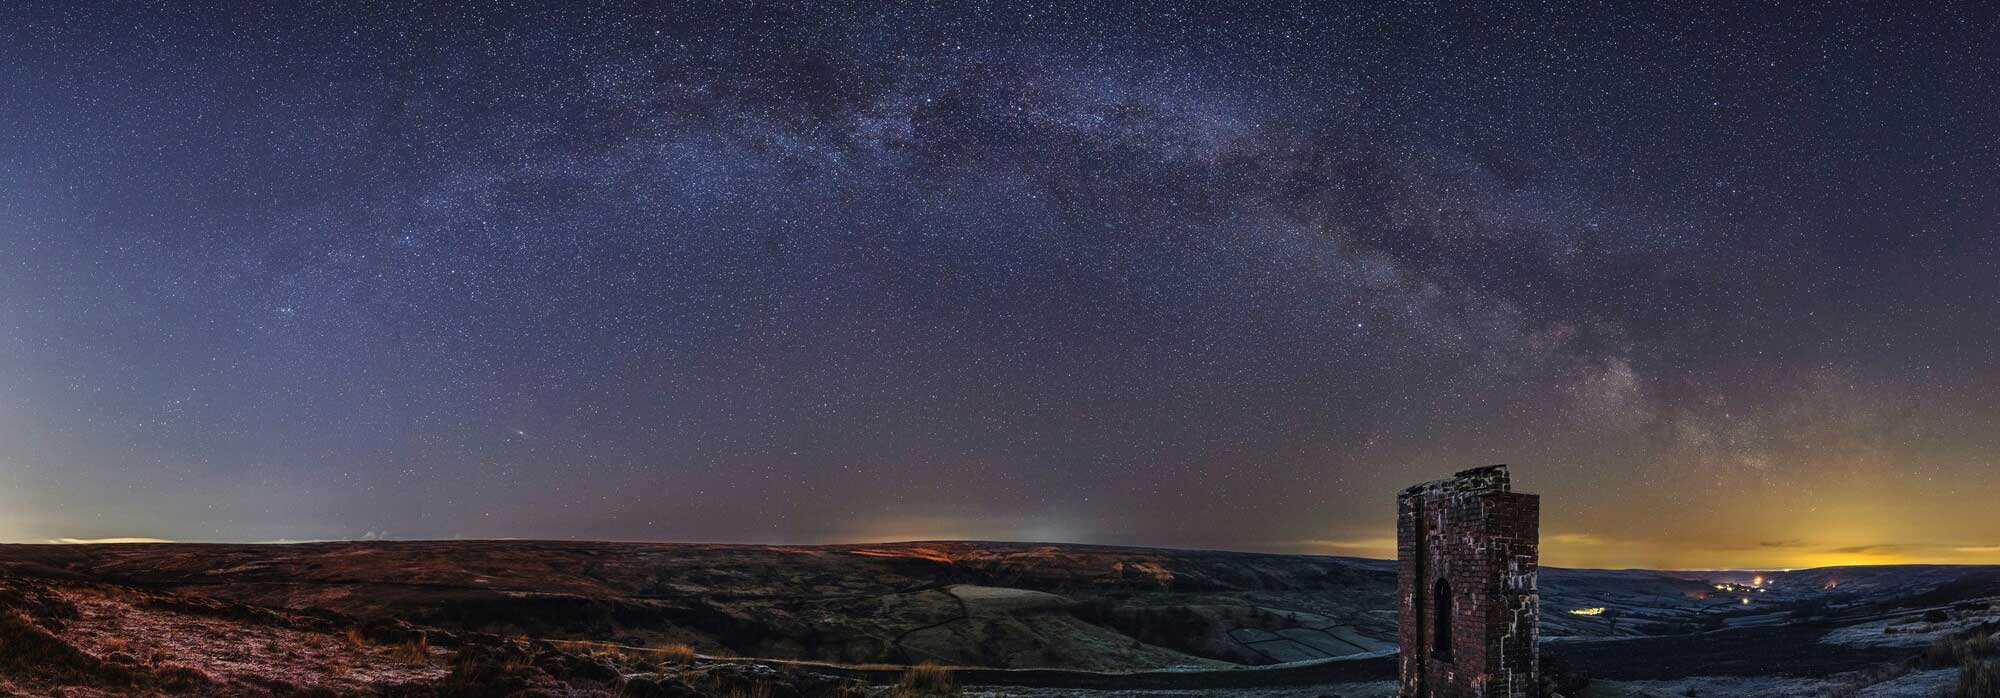 Milky Way above a moorland landscape. Credit Tony Marsh.